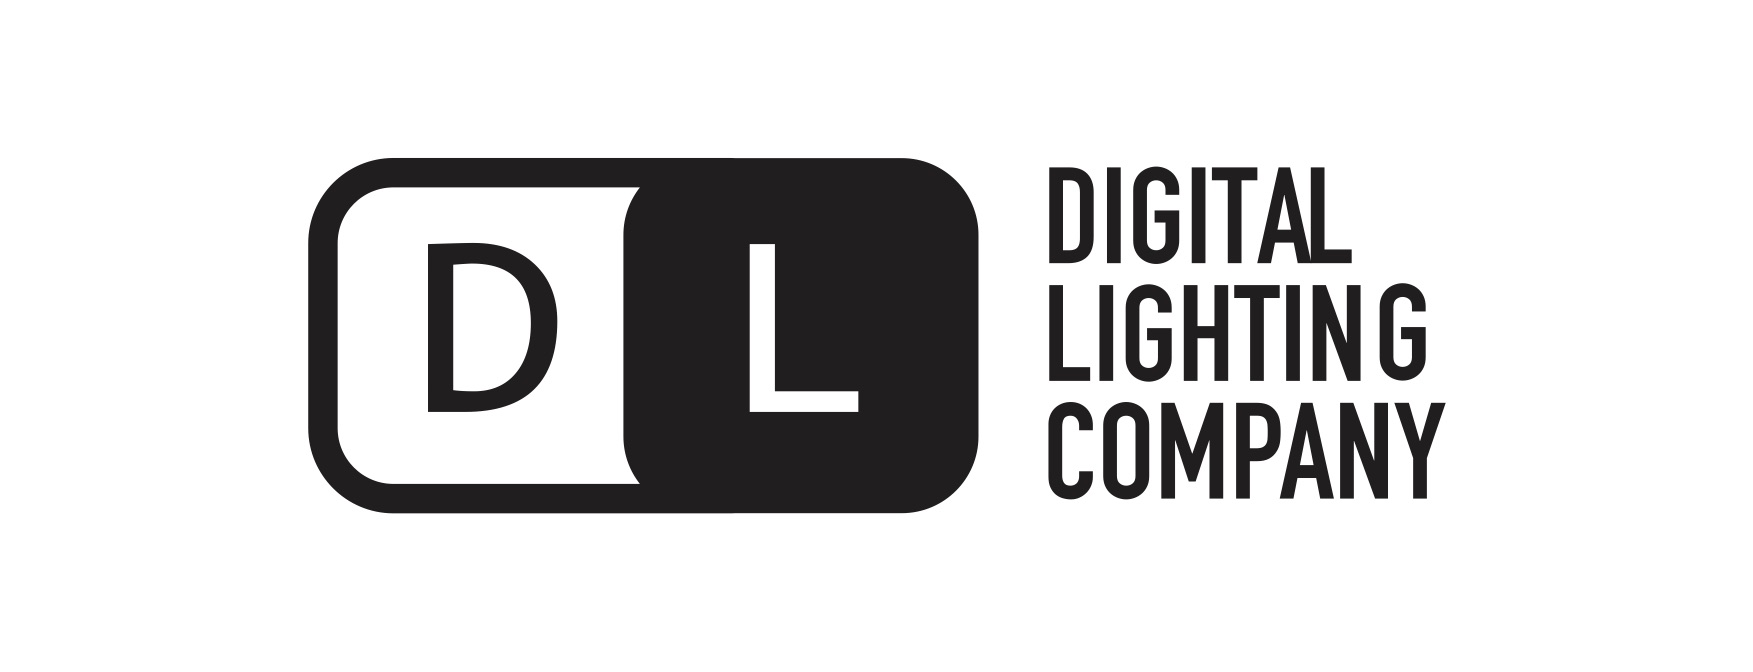 Digital Lighting Company_LOGO (1)